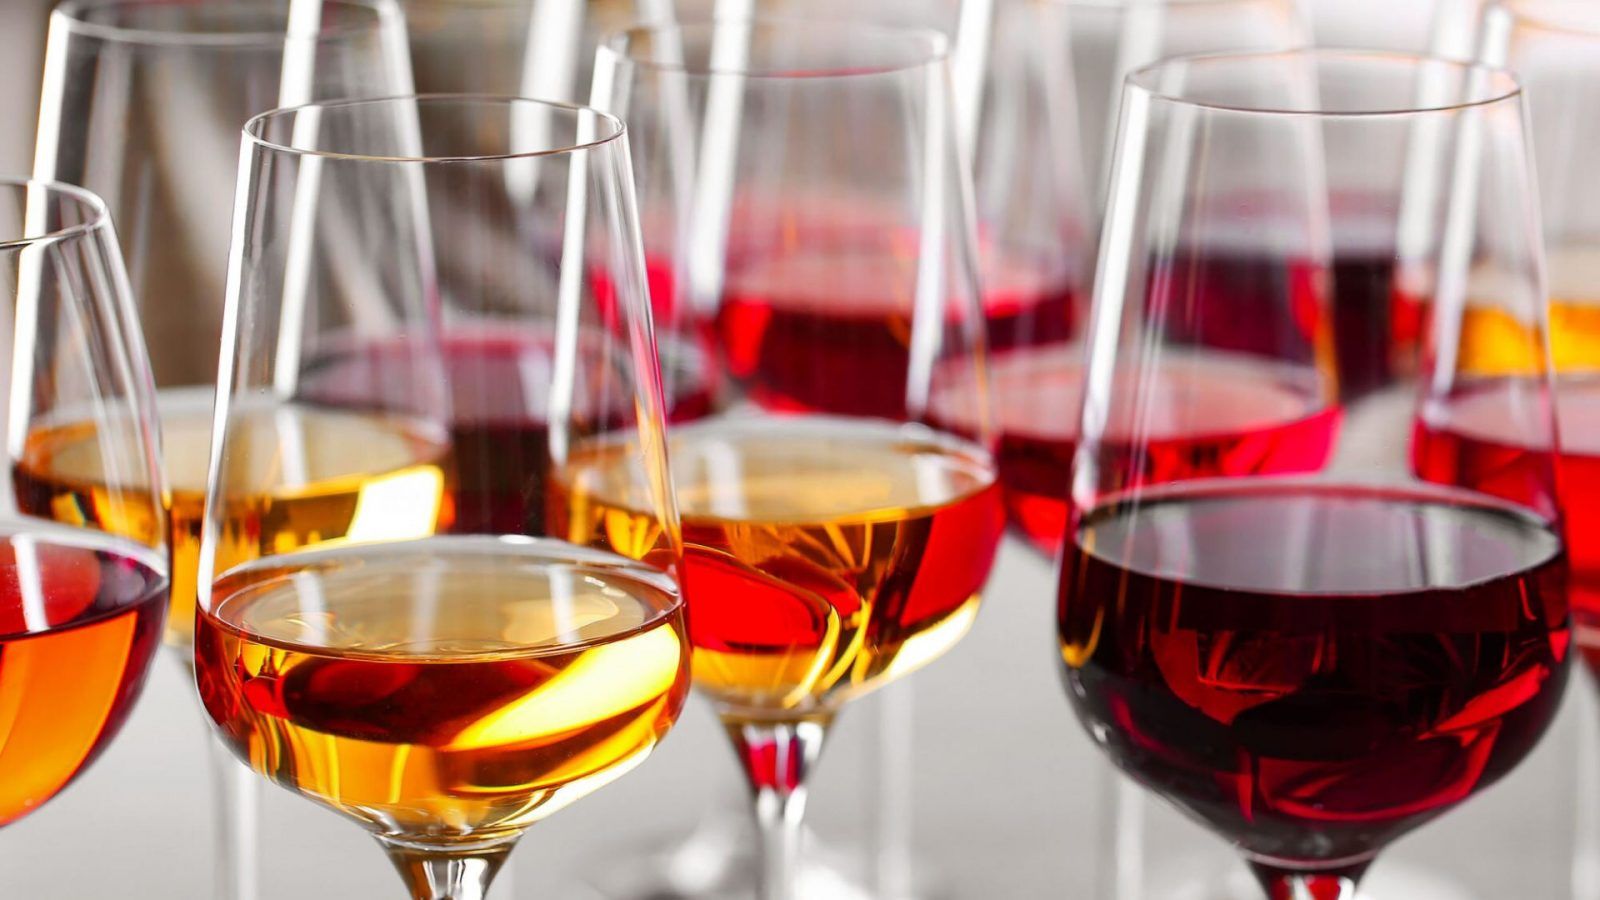 How to taste wine like a pro